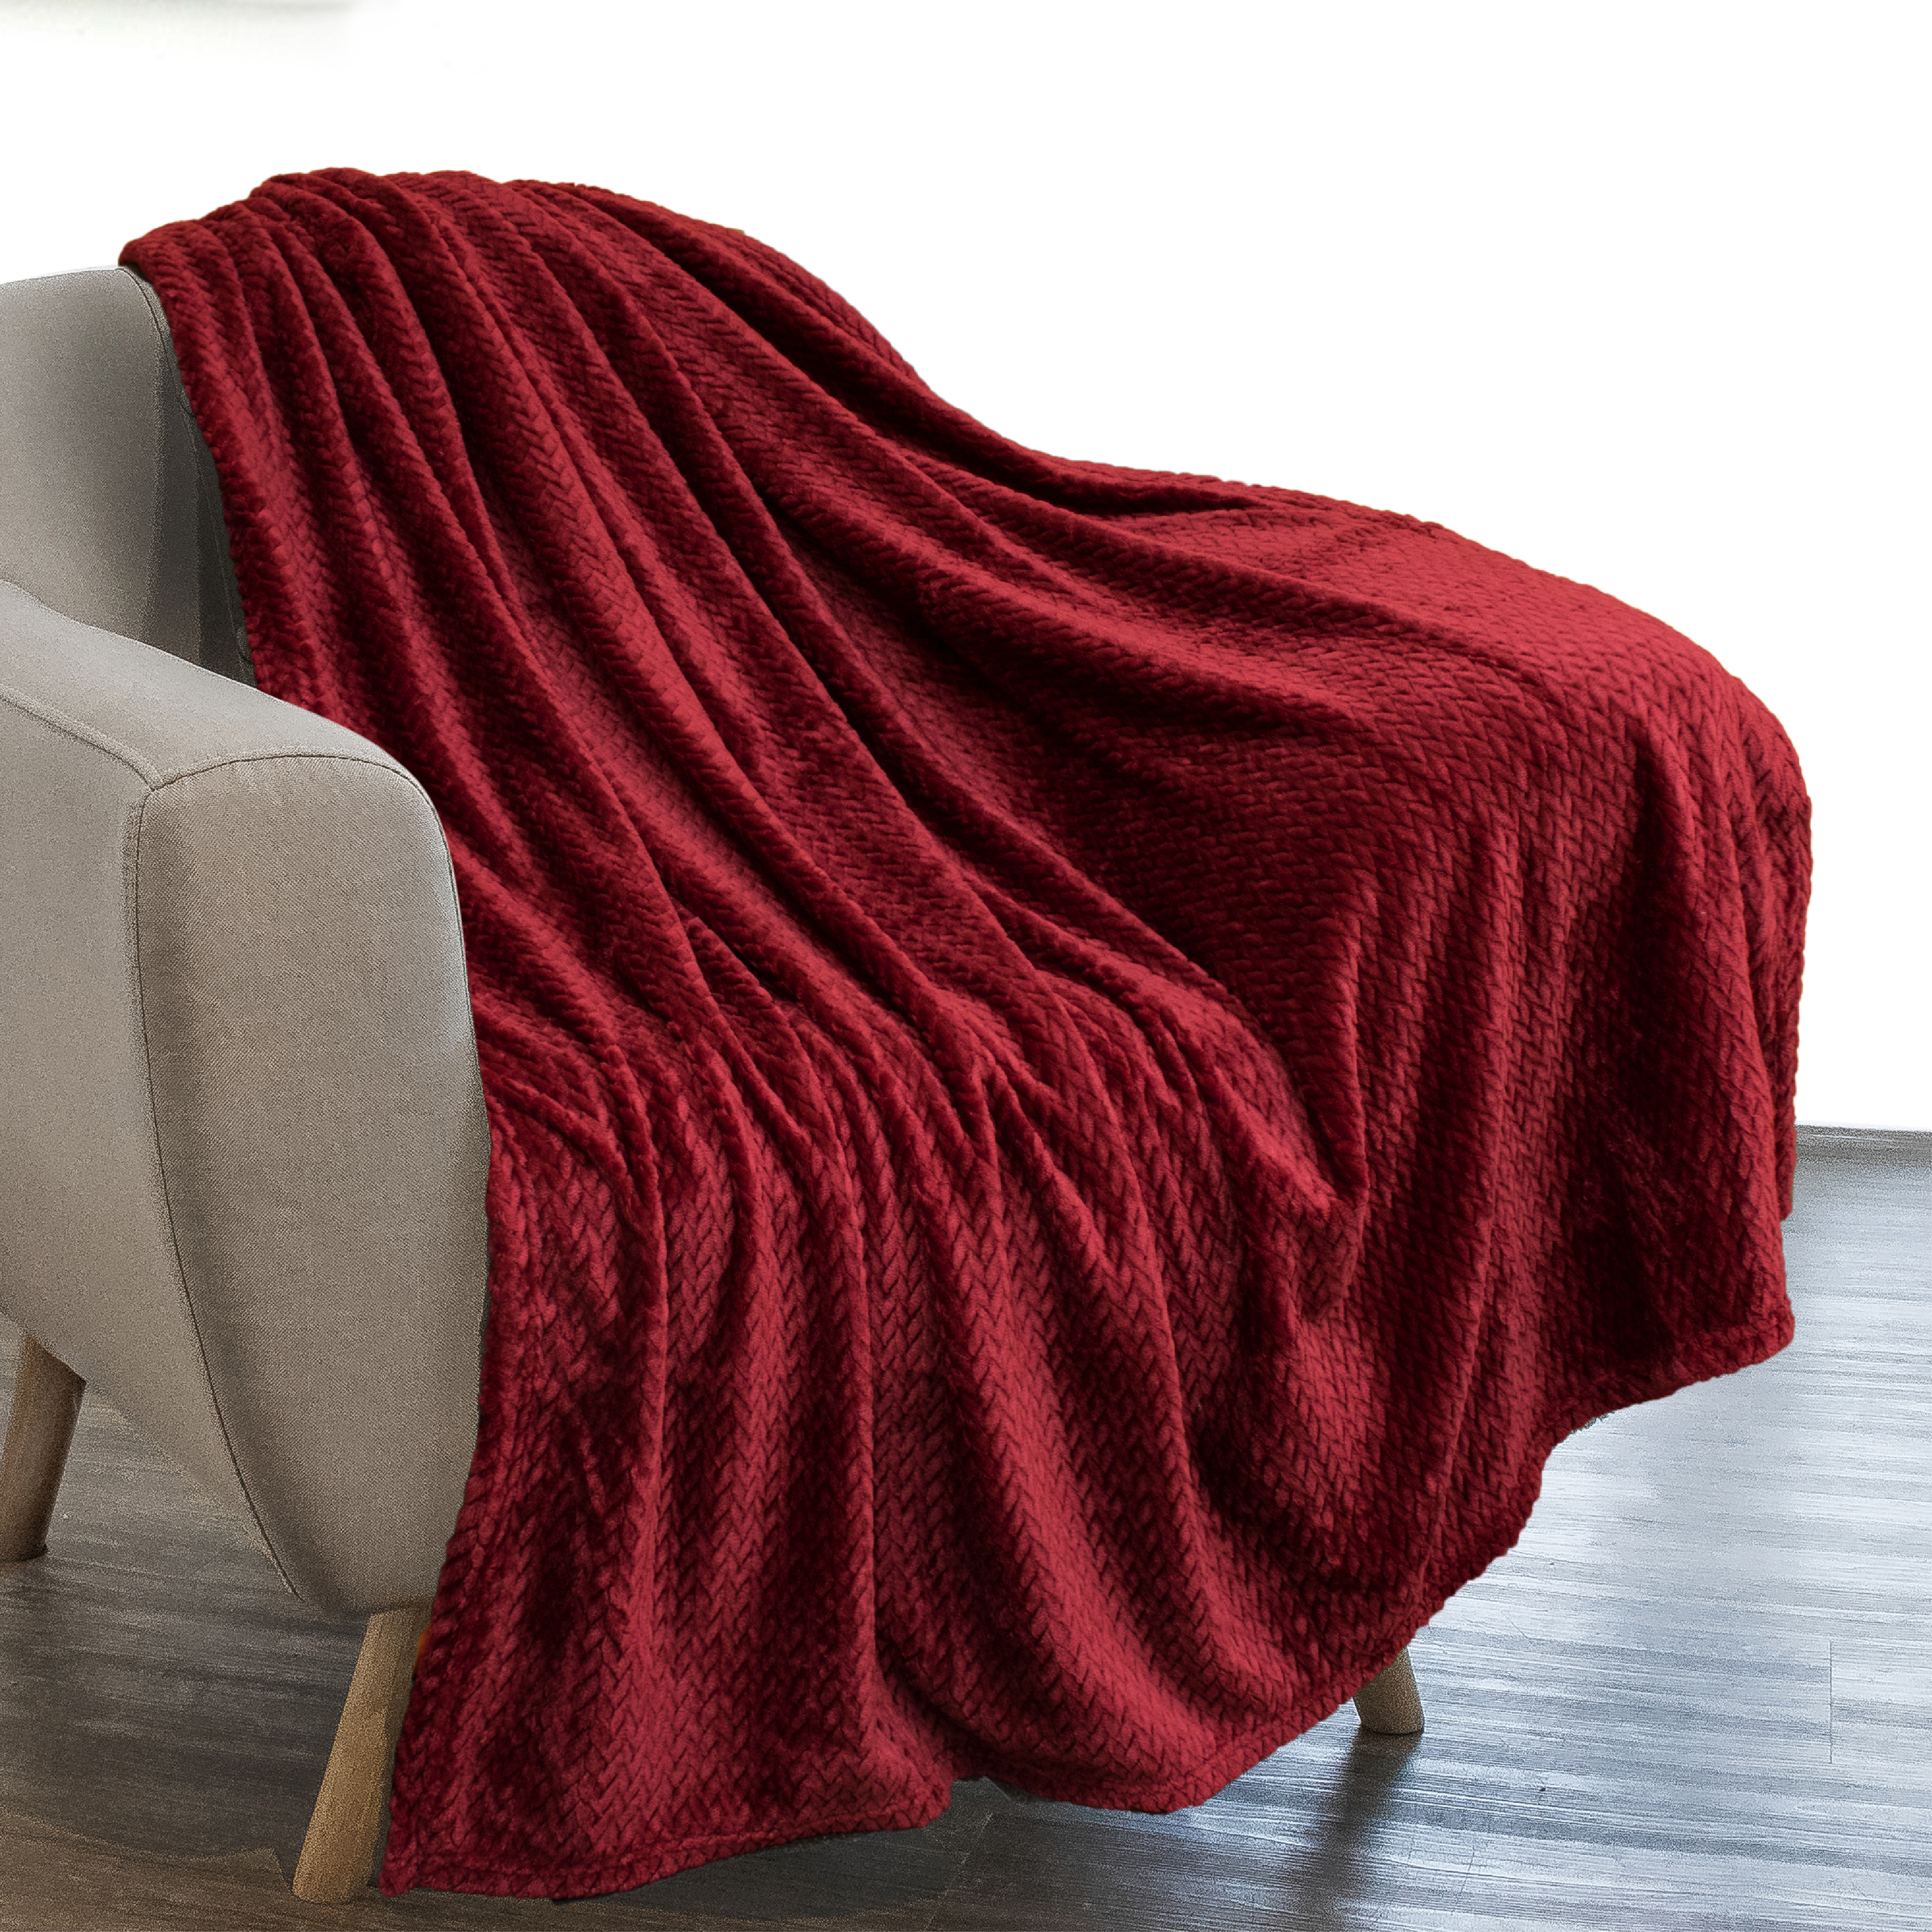 Solid Burgundy Red Blanket Bedding Throw Fleece Full Super Soft Warm 